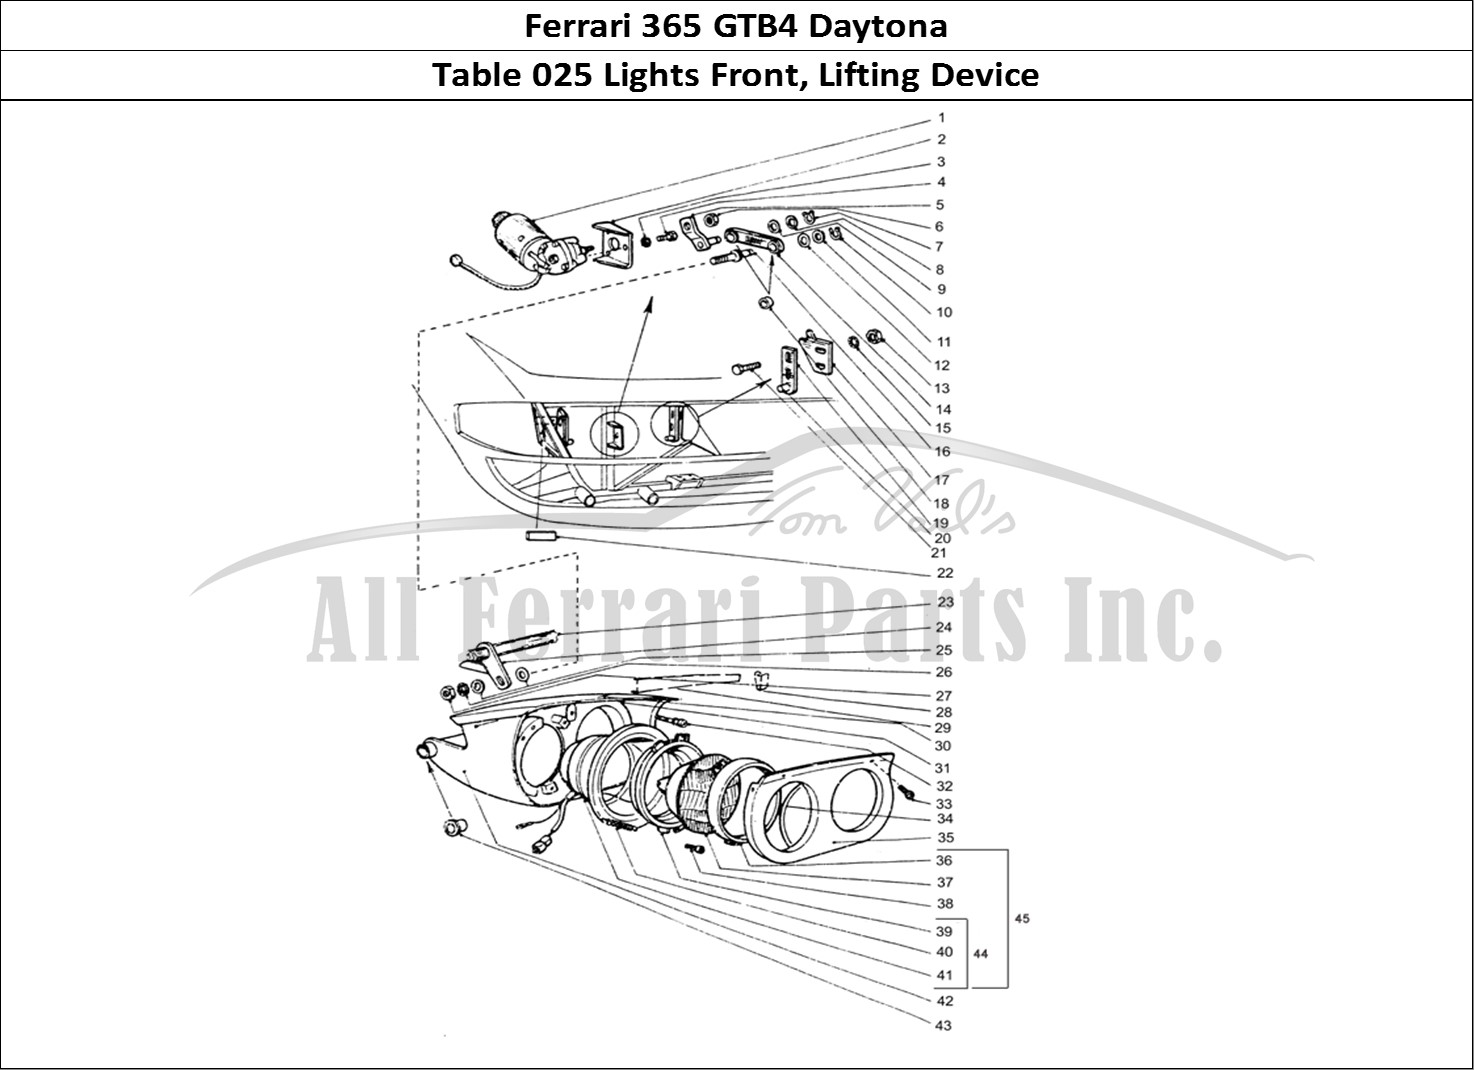 Ferrari Parts Ferrari 365 GTB4 Daytona (Coachwork) Page 025 Front head lights & Motor